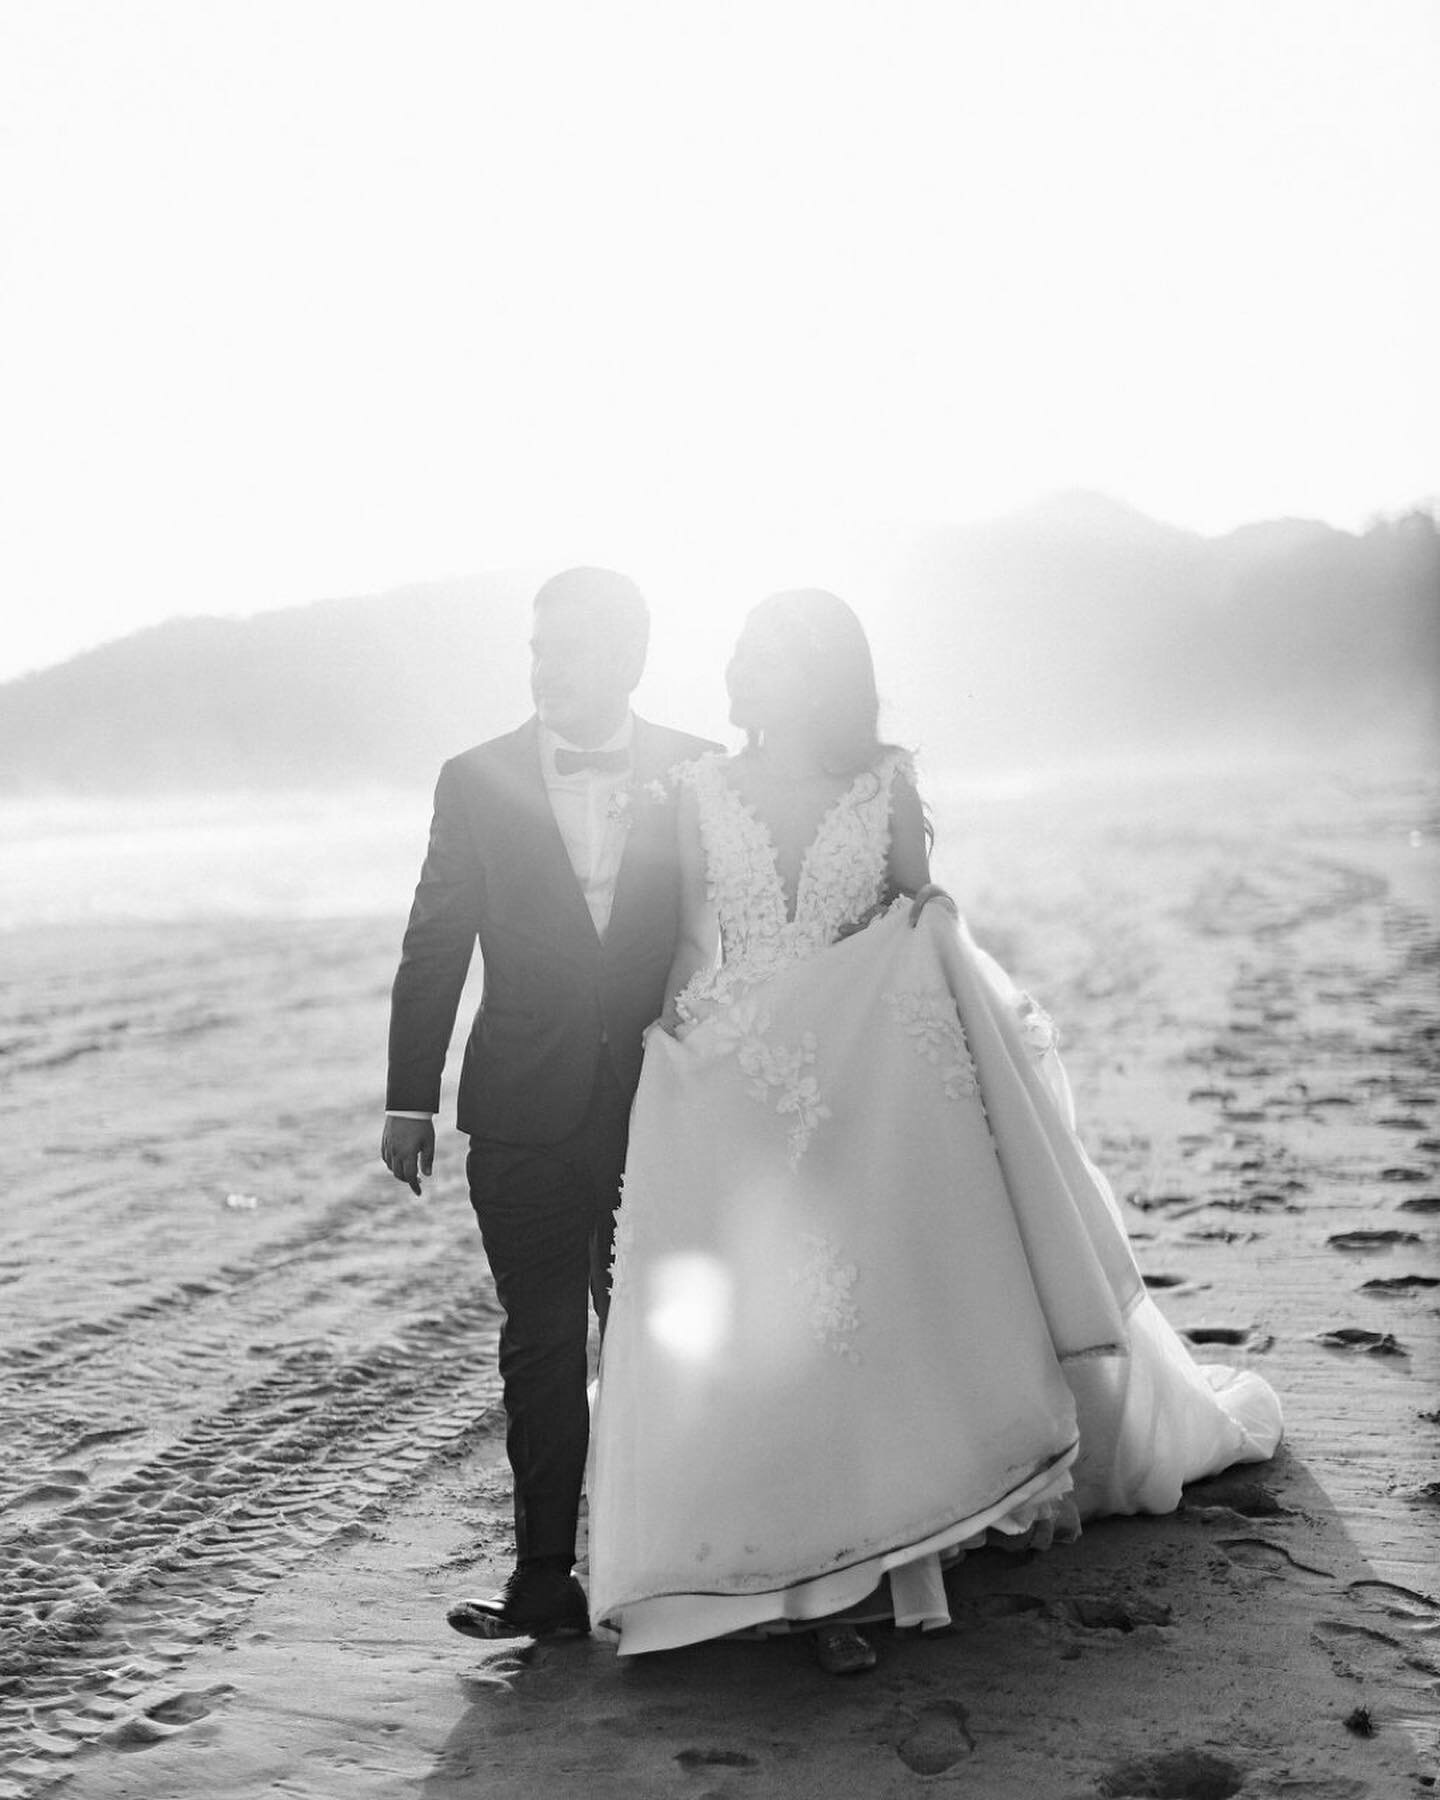 Por m&aacute;s atardeceres a la orilla Del Mar 🌊 

WP @wpmfcuevas 

-
#destino #destinowedding #destinoweddings #destinoweddingphotography #wedding #bodaspetite #bodas #bodasmexico #hermoso